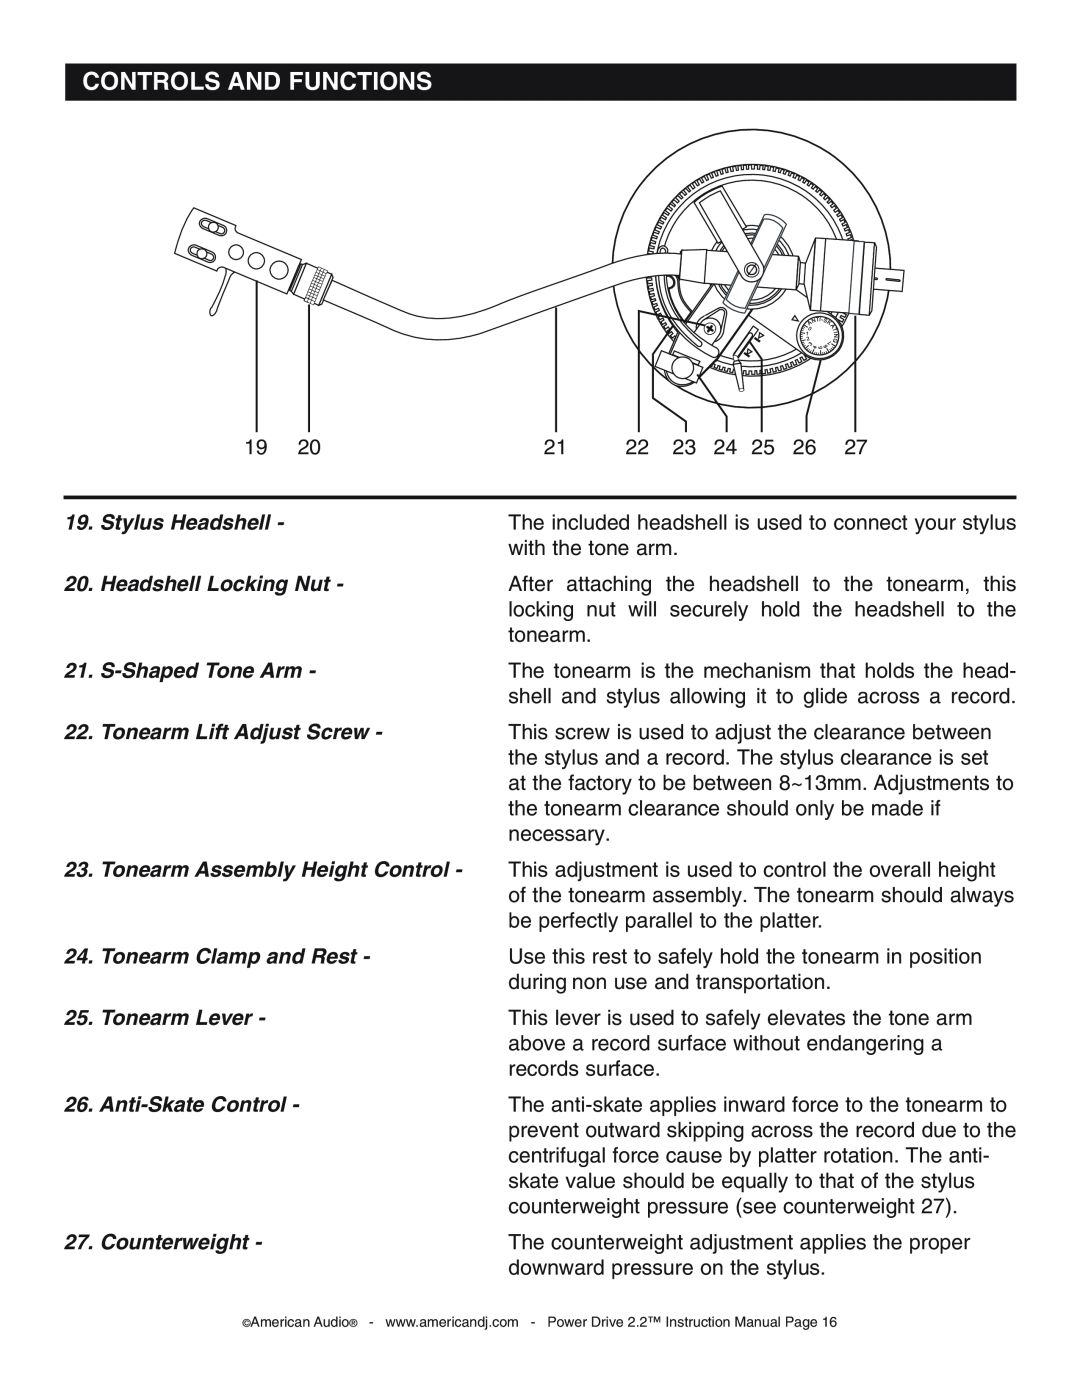 American Audio POWERDRIVE22.pdf manual Stylus Headshell, Headshell Locking Nut, S-ShapedTone Arm, Tonearm Lift Adjust Screw 